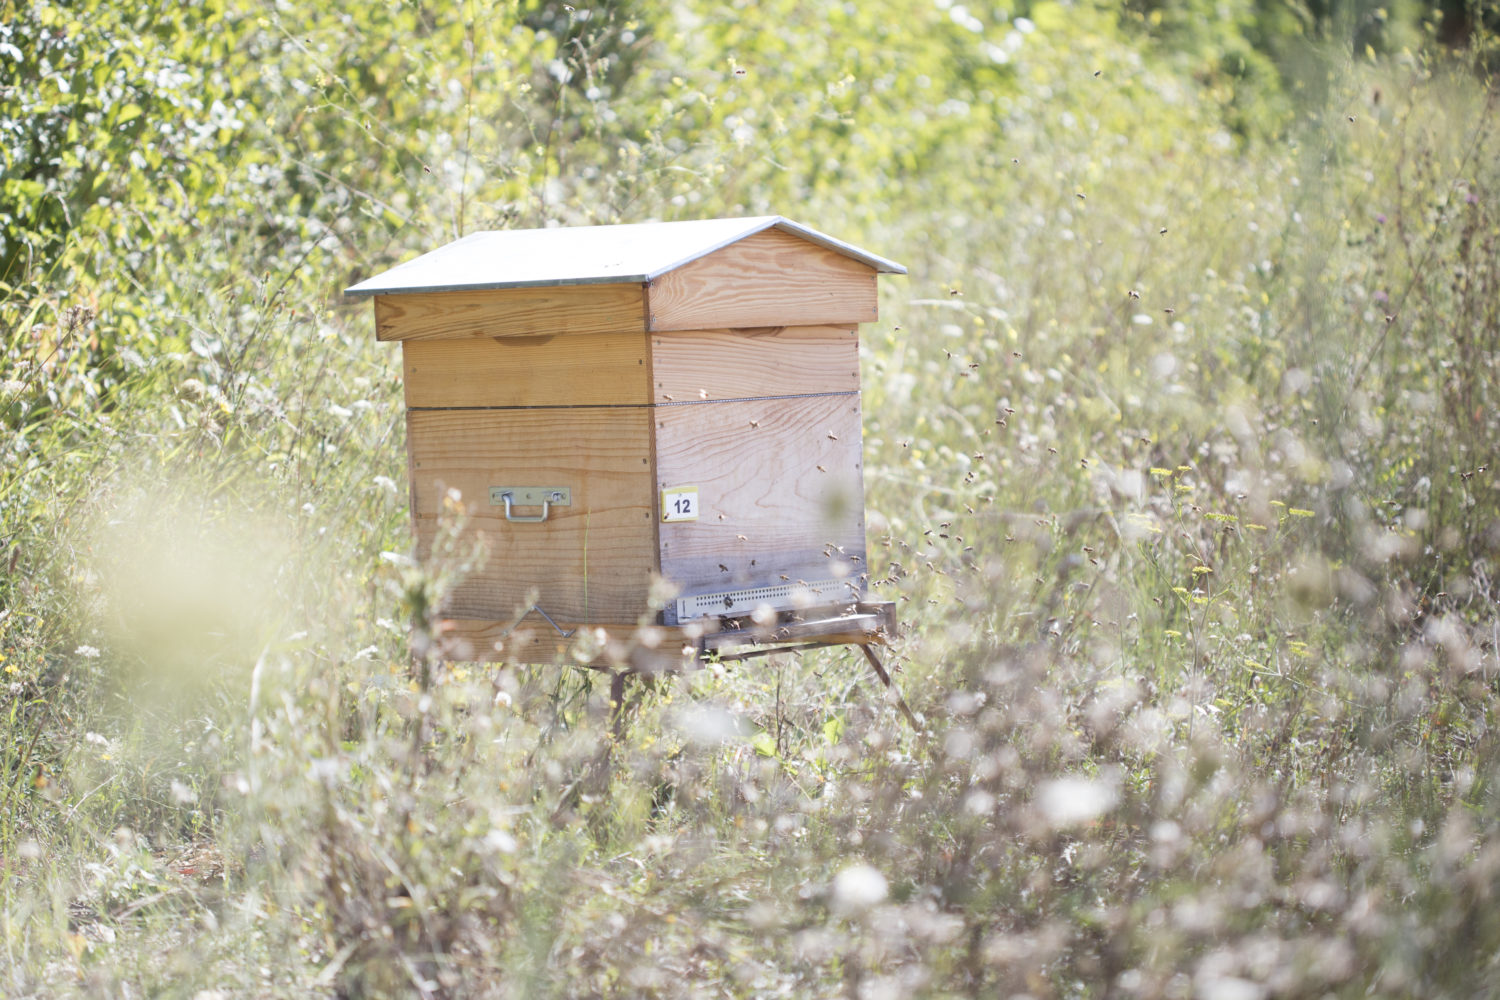 Bijenkasten: welke bijenkast kan je het beste kiezen?